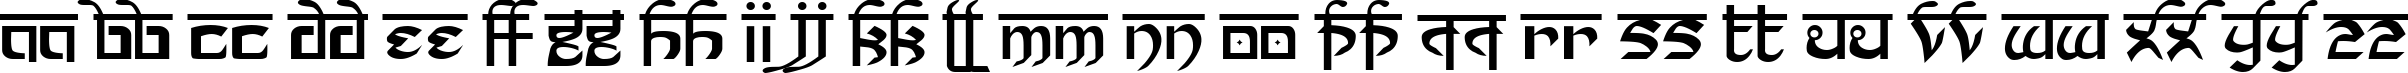 Пример написания английского алфавита шрифтом Prakrta